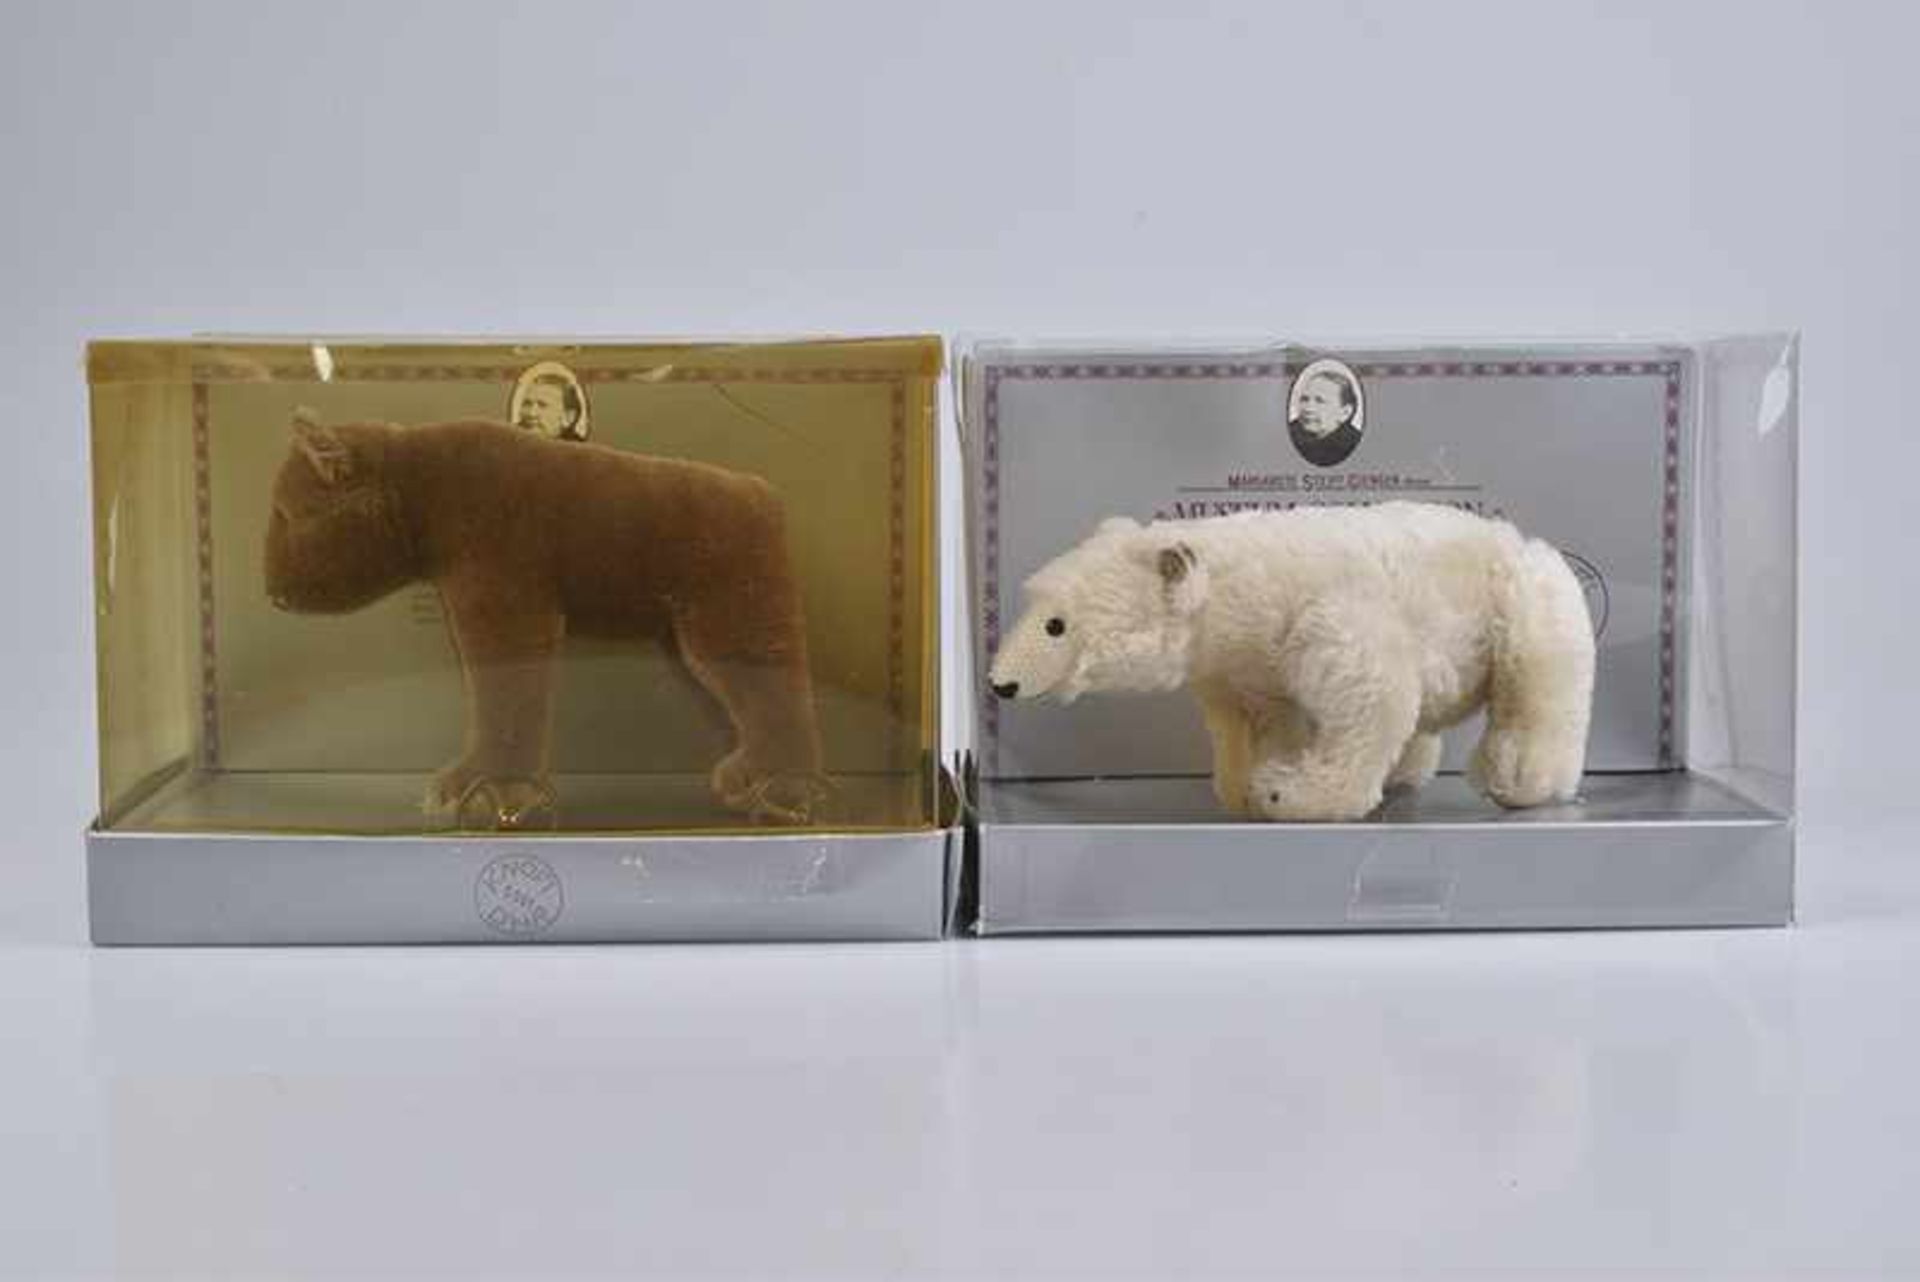 STEIFF "Bär auf Rädern 1905" und "Polarbär 1909", Replica, Museum-Collection, Mohair, Bär auf